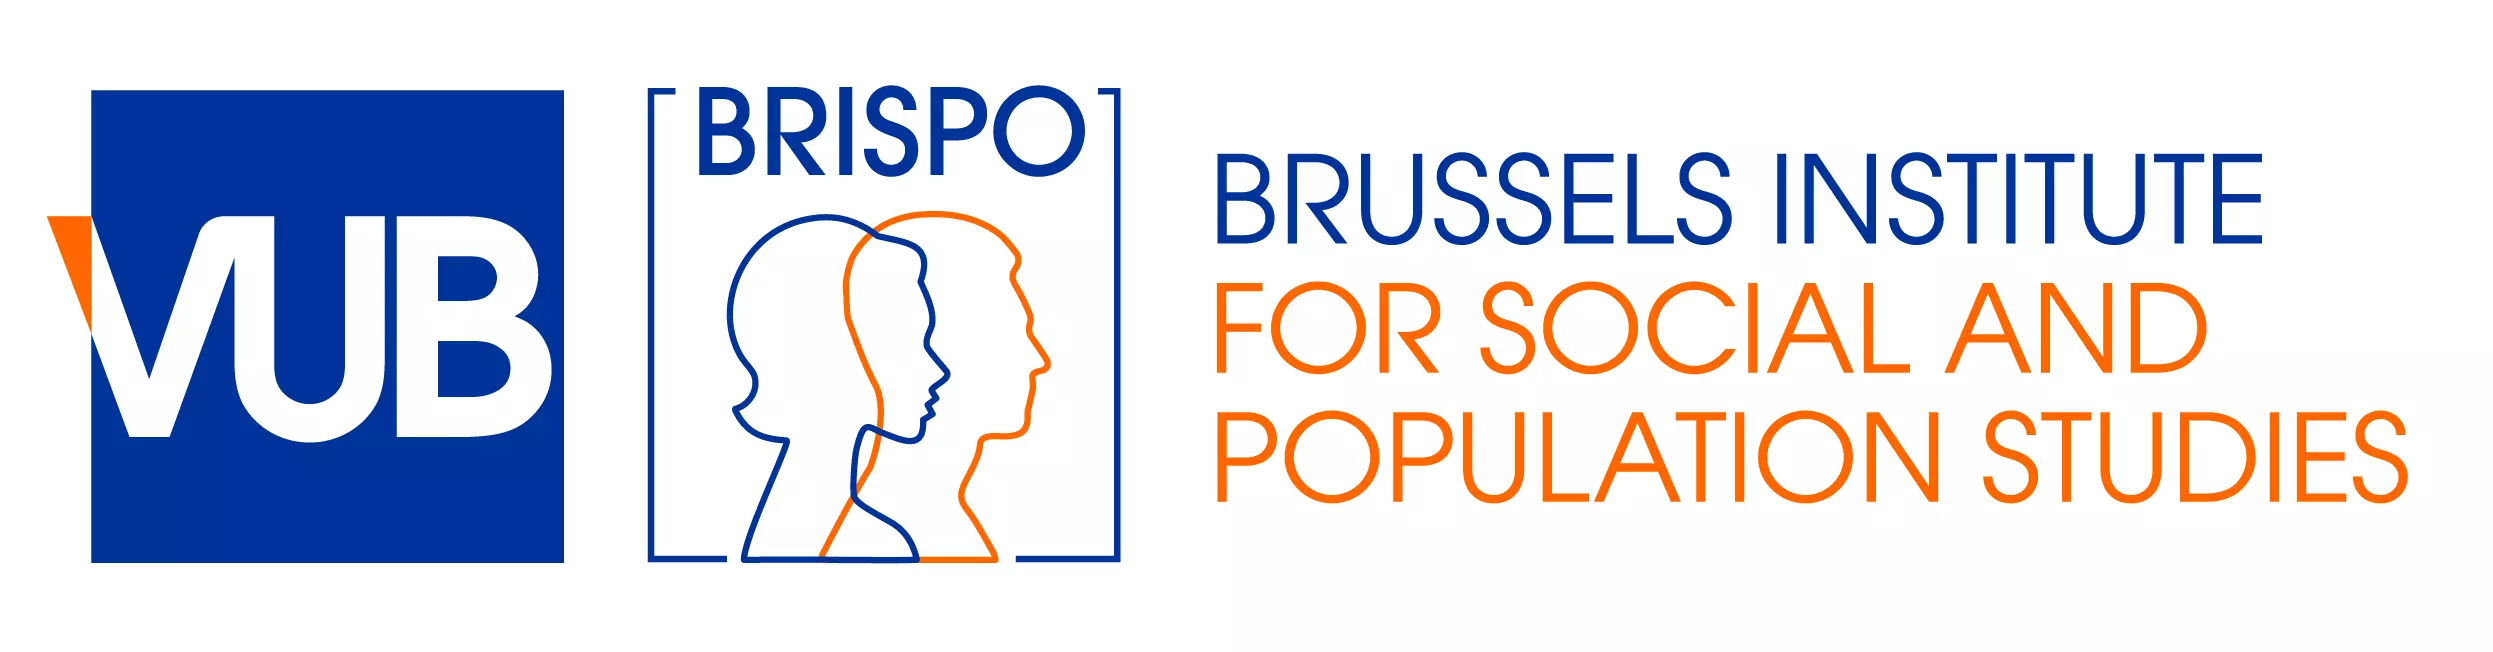 BRISPO: Brussels Institute for Social and Population Studies homepagina